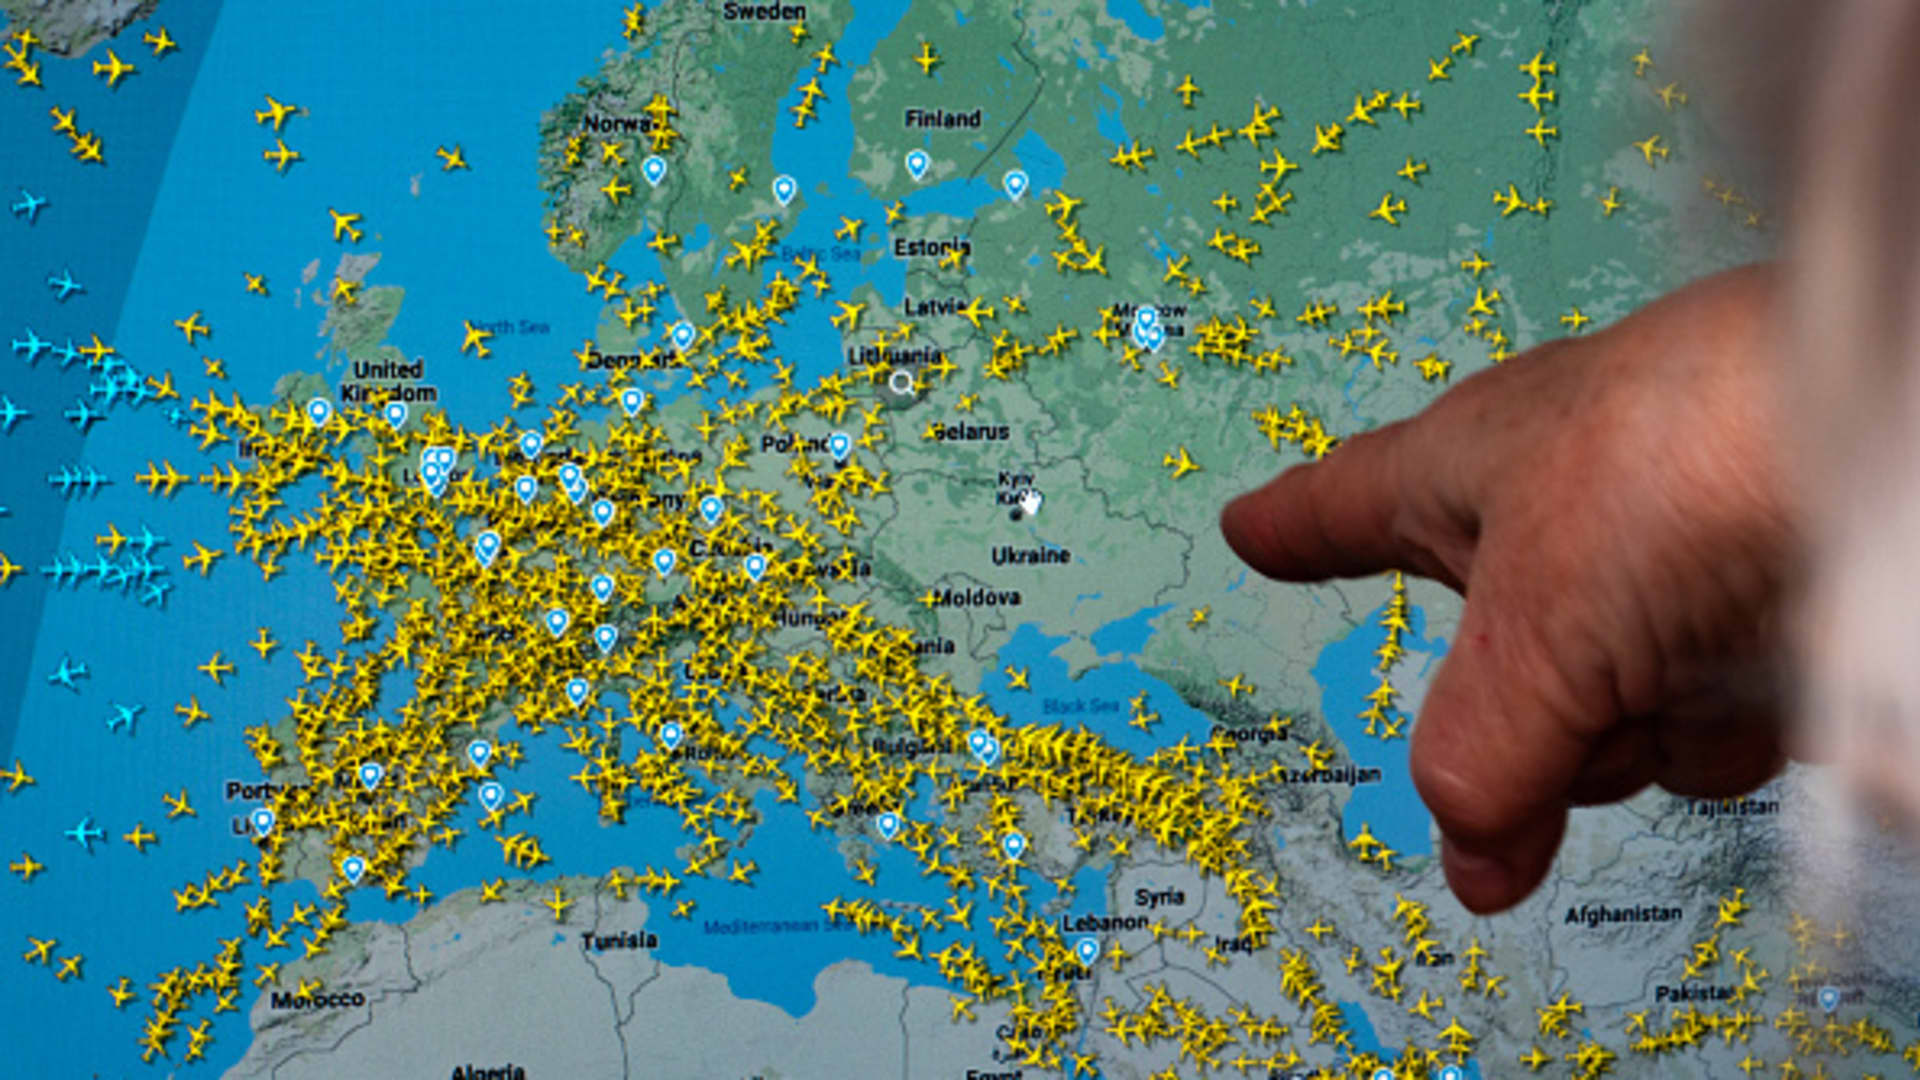 FlightRadar24 website, an online flight tracker shows no aircrafts flying over Ukraine after the Russian attack.